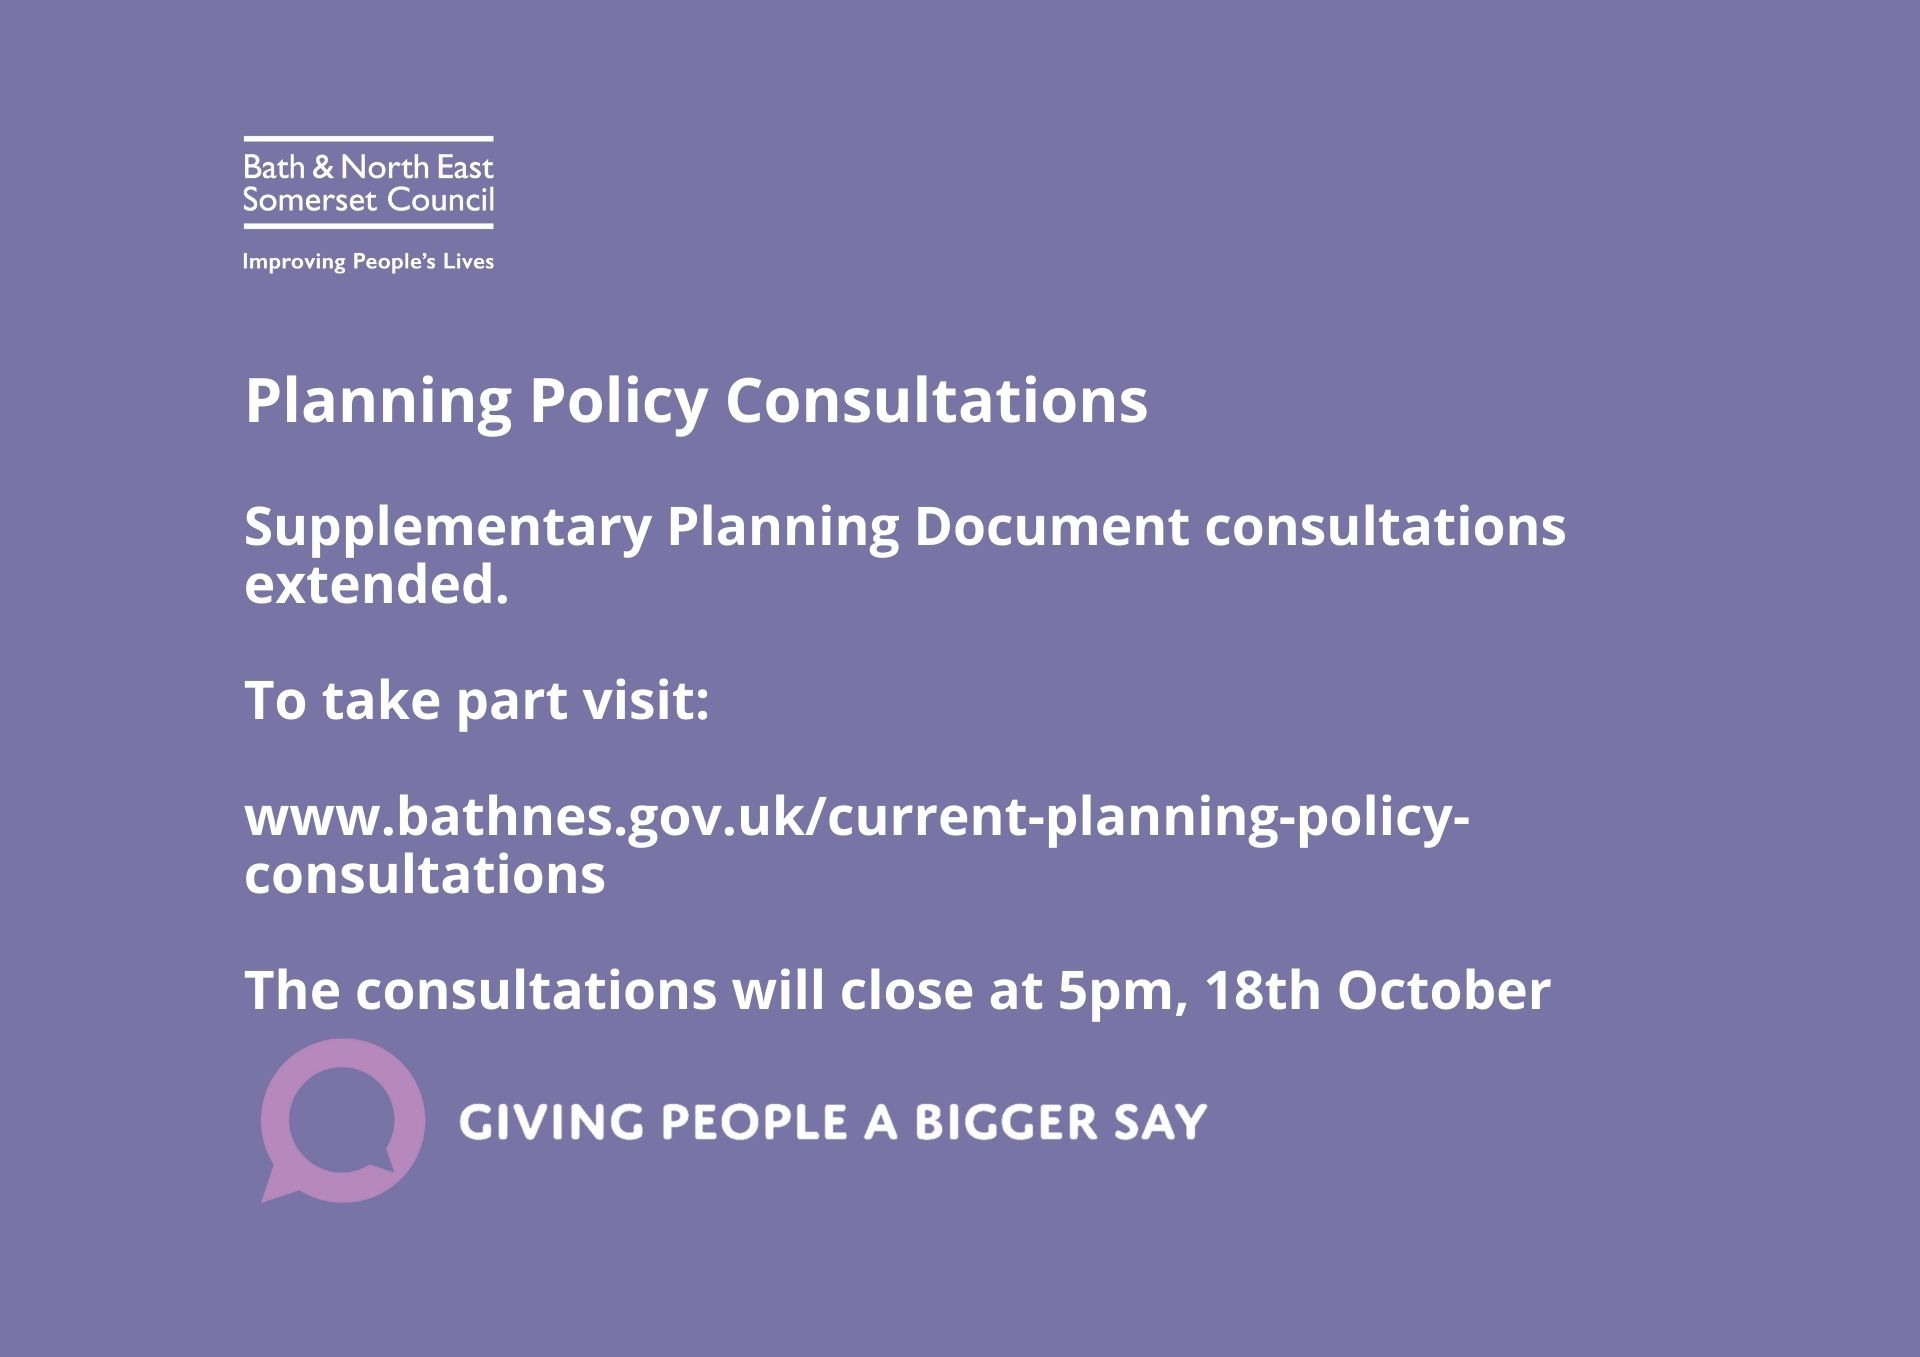 details of the consultation deadline 